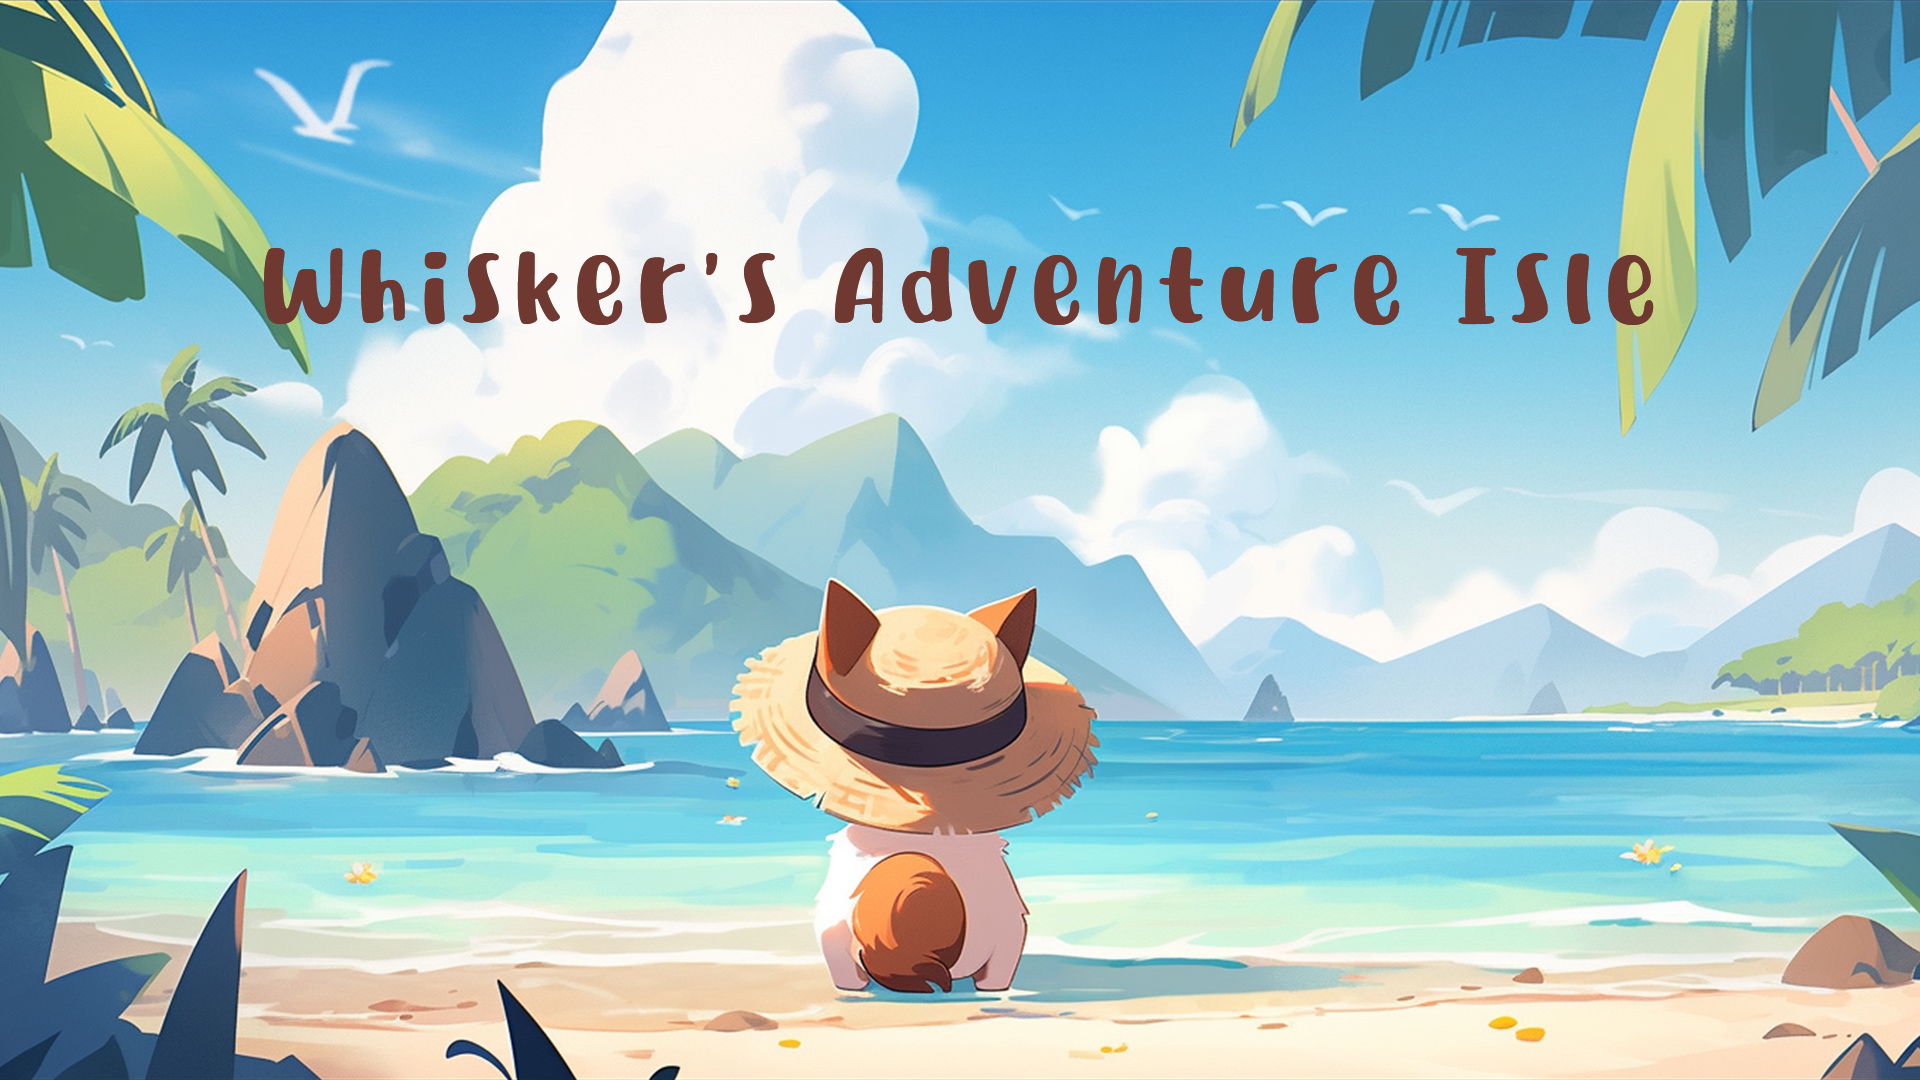 Whisker's Adventure Isle